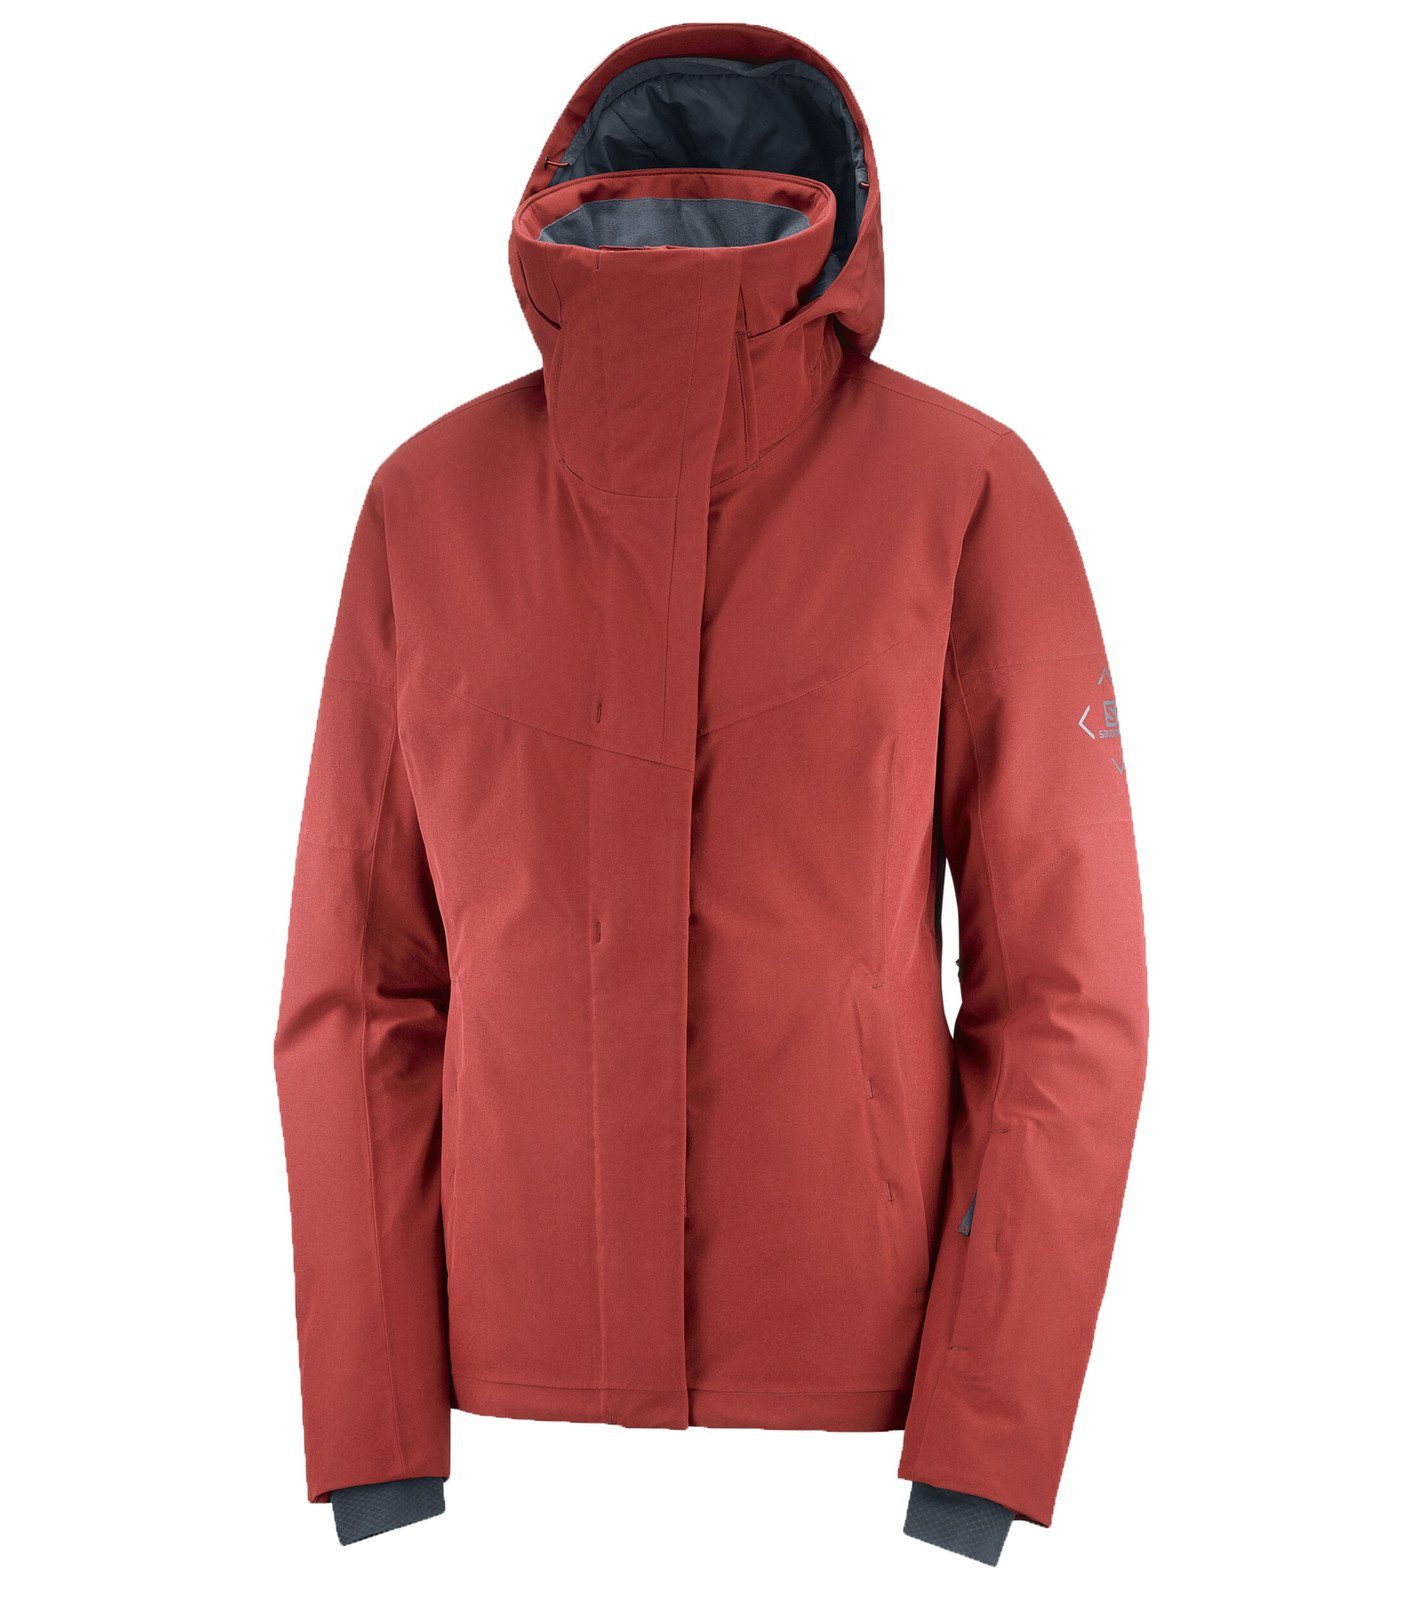 Salomon Outdoorjacke »Salomon Speed Isolations-Jacke hochgeschlossene Damen  Ski-Jacke Kapuzen-Jacke Schnee-Jacke Rot« online kaufen | OTTO